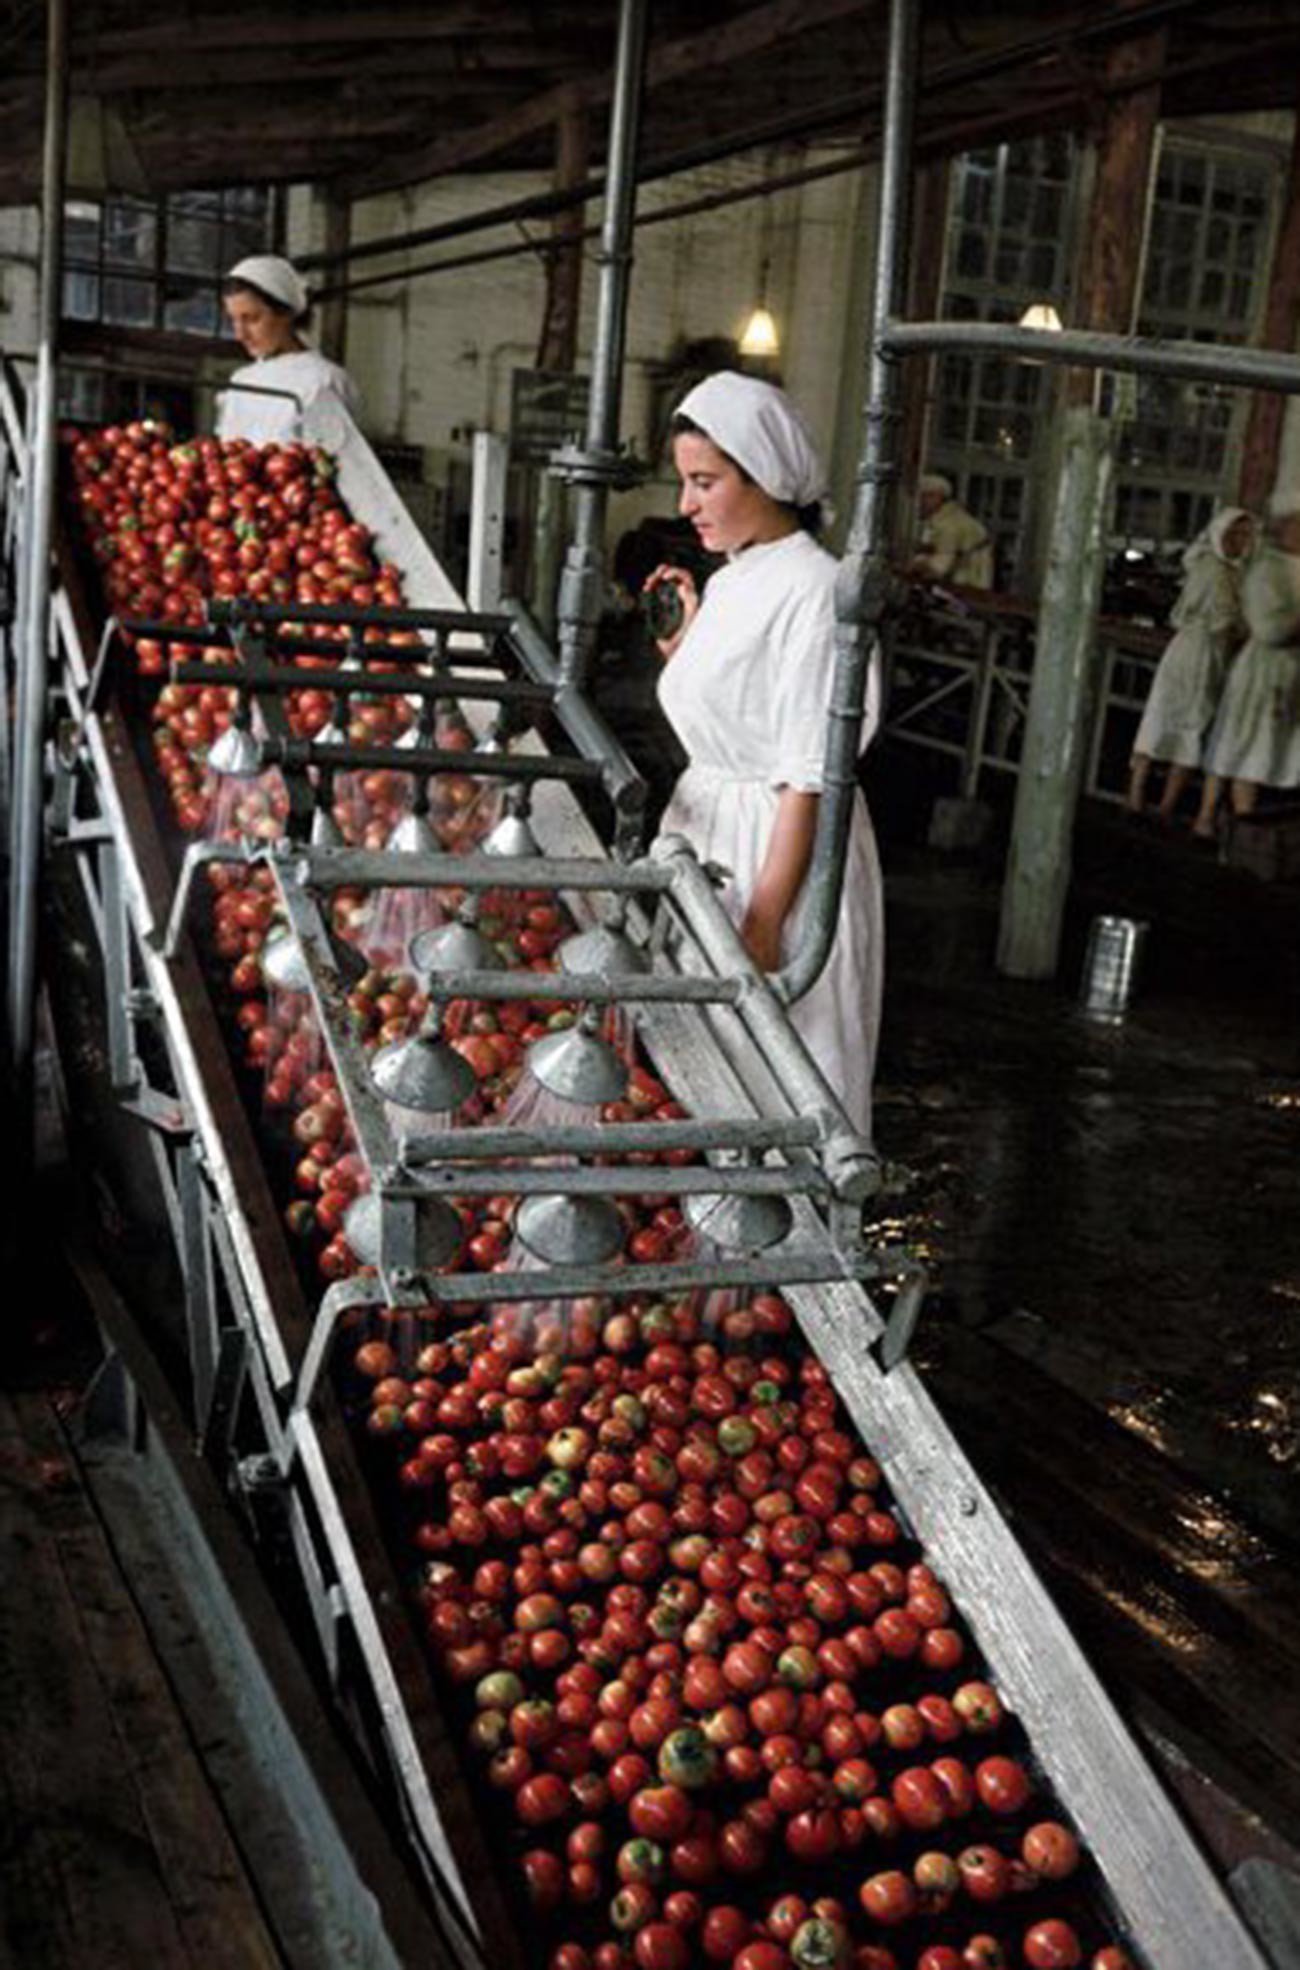 Tomatoes at the May 1st Tiraspol canning factory, 1953